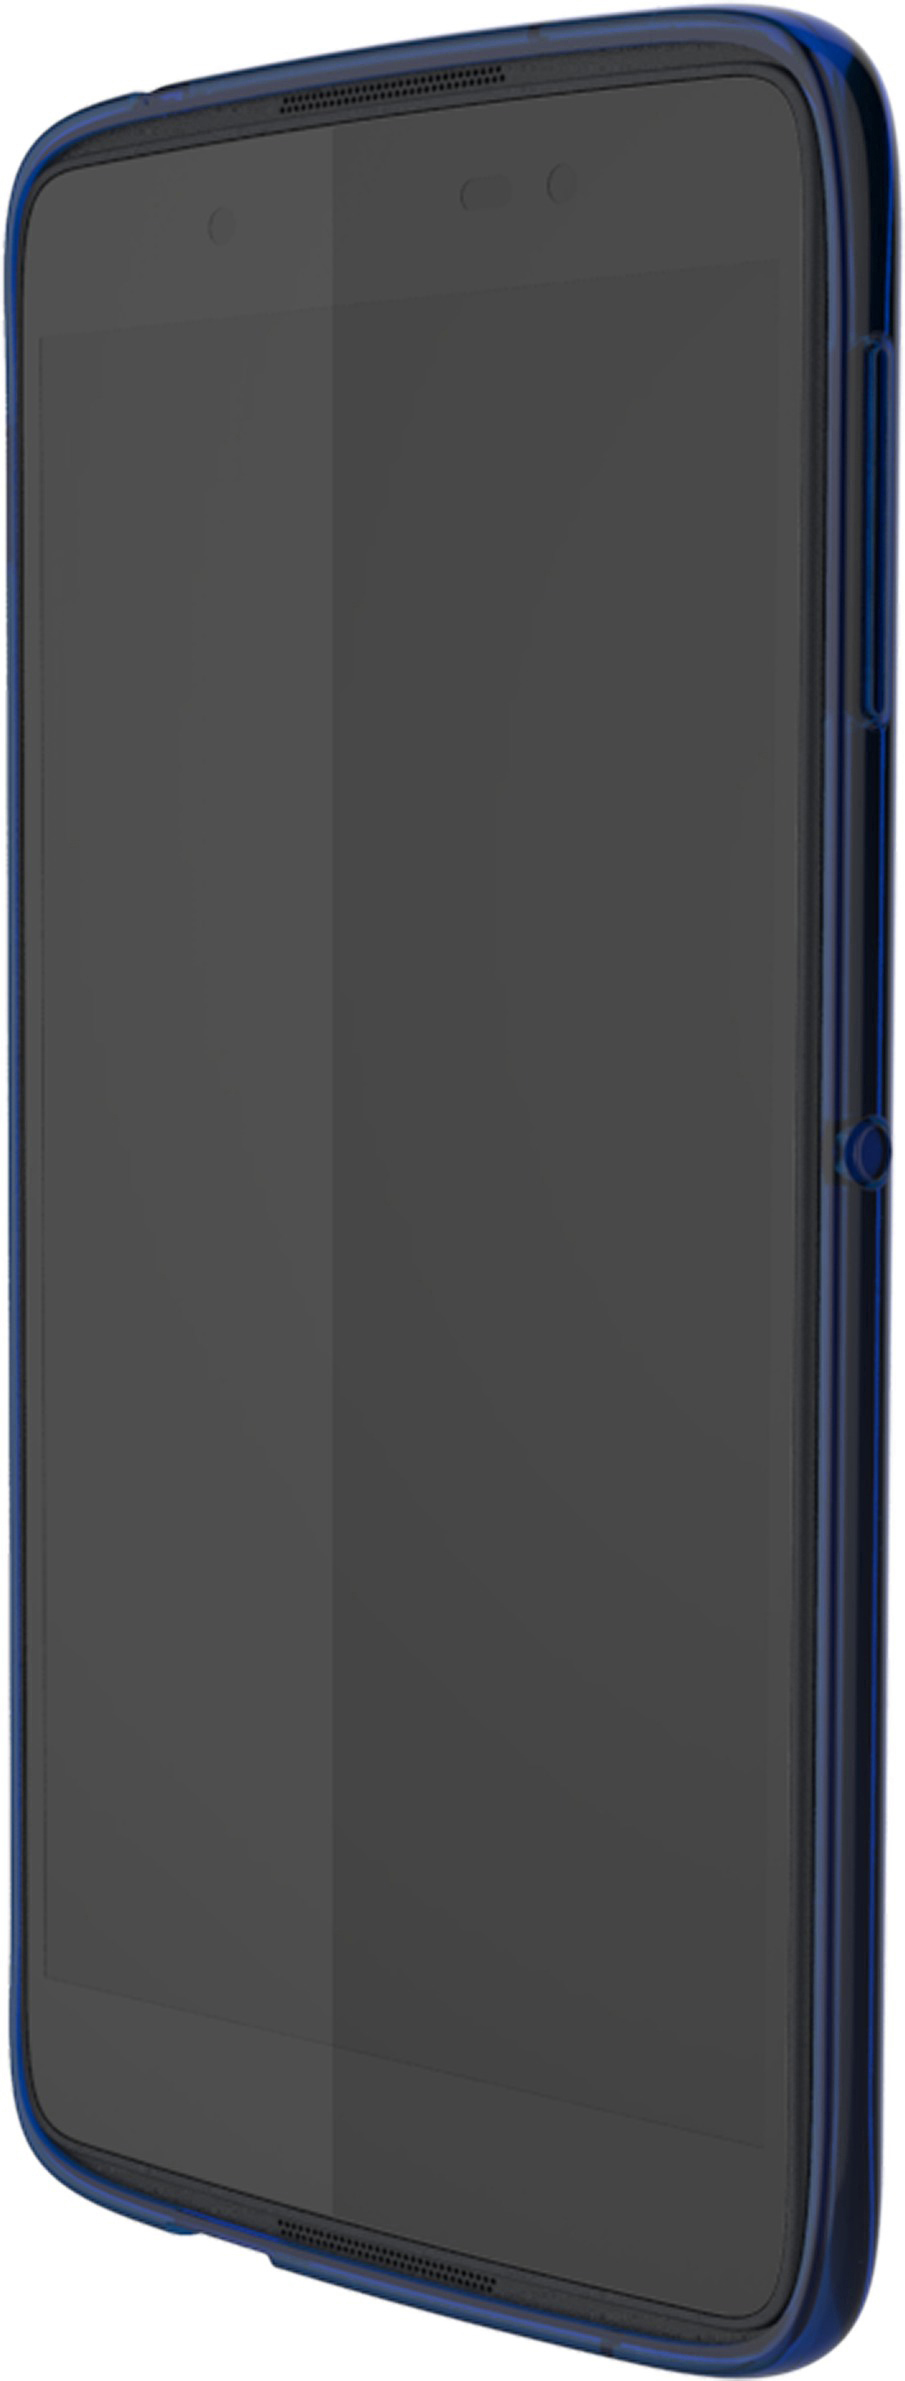 BLACKBERRY Soft Shell, DTEK 50, Blackberry, Blau/Transparent Backcover